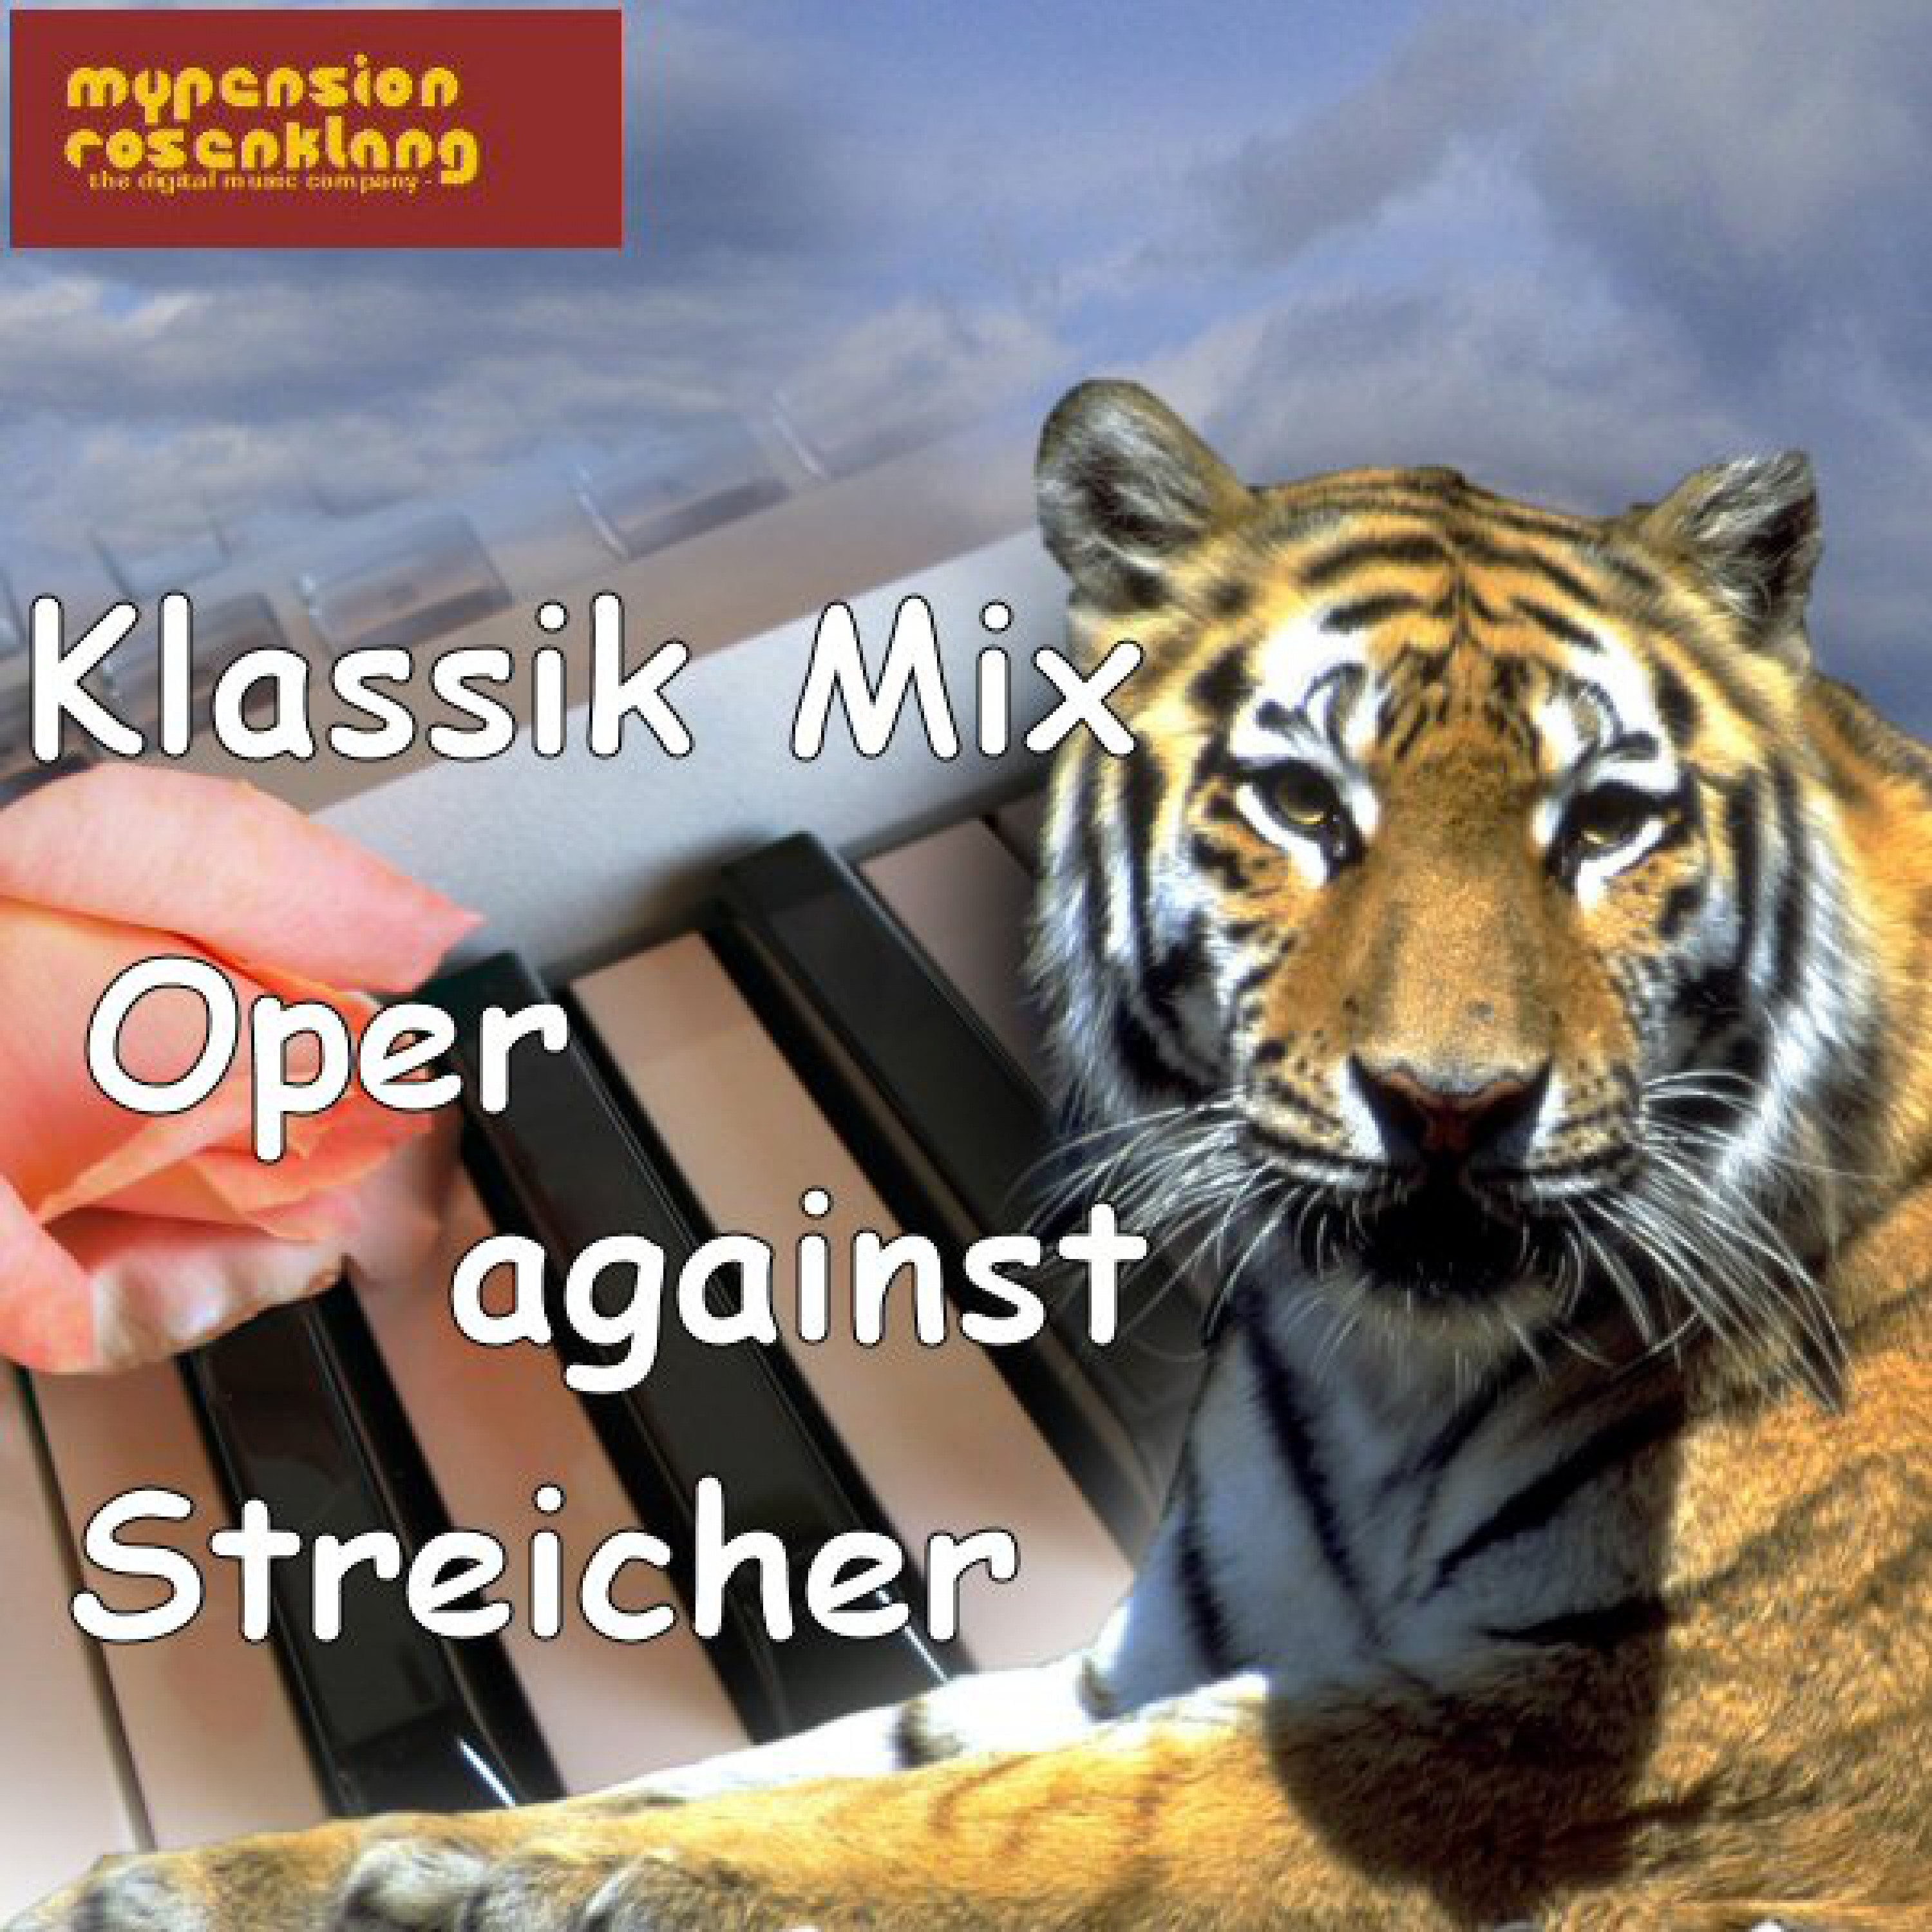 Classical Music Mix - Oper Arie Against Strings / Klassik Mix - Oper Gegen Streicher